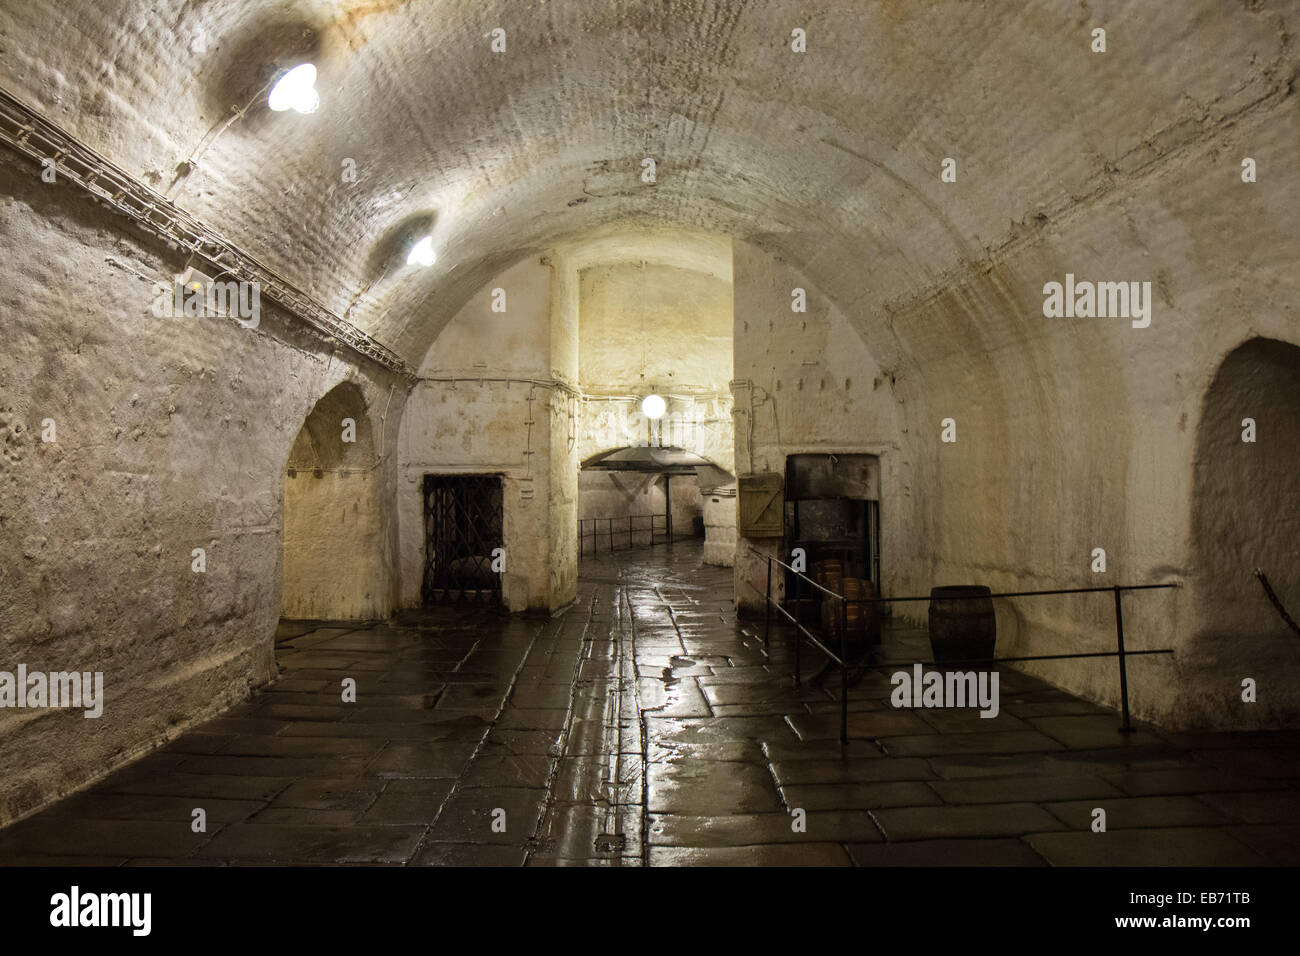 Czech Republic: The cellars of Pilsner Urquell brewery, Pilsen. Photo from 8. November 2014 Stock Photo